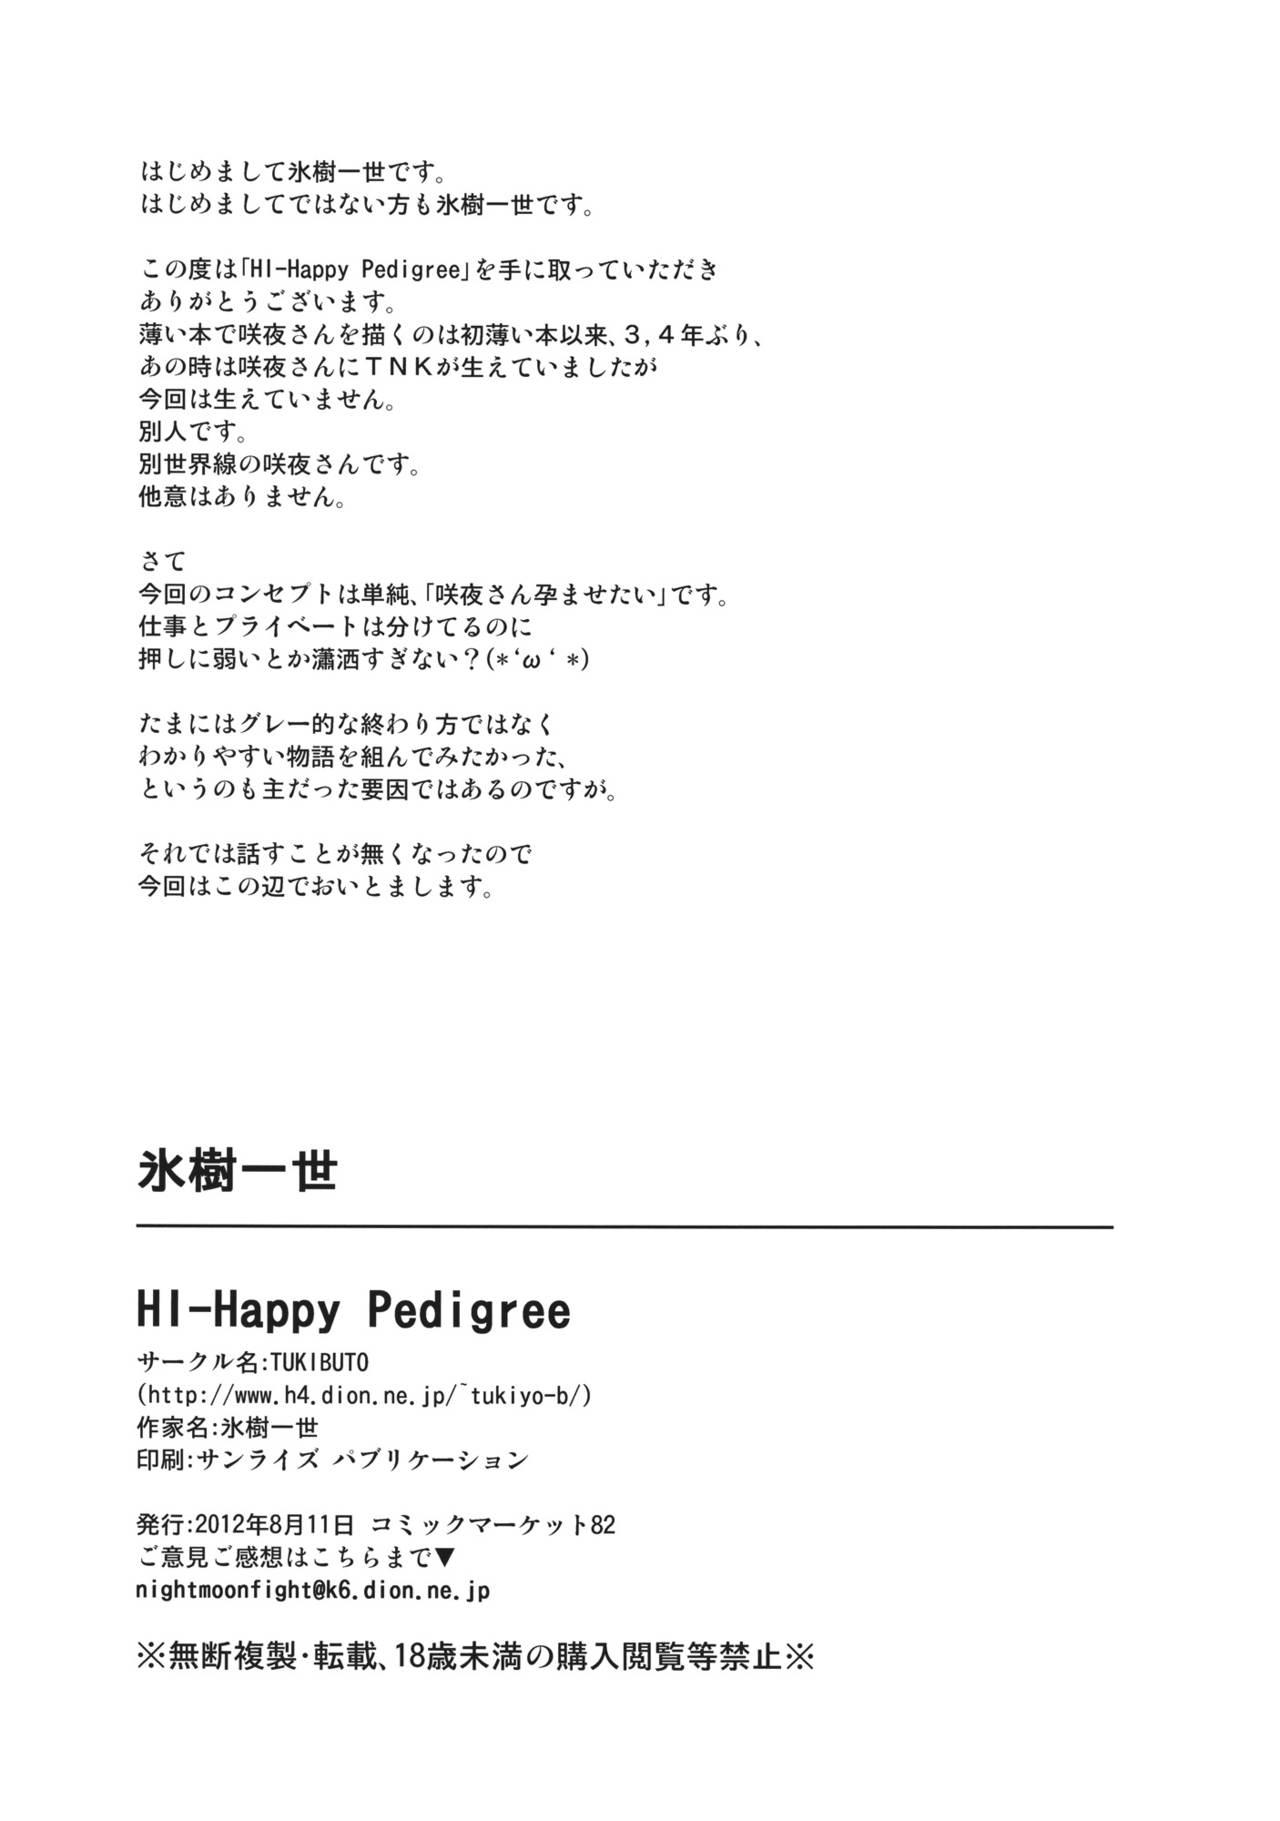 HI-Happy Pedigree 24